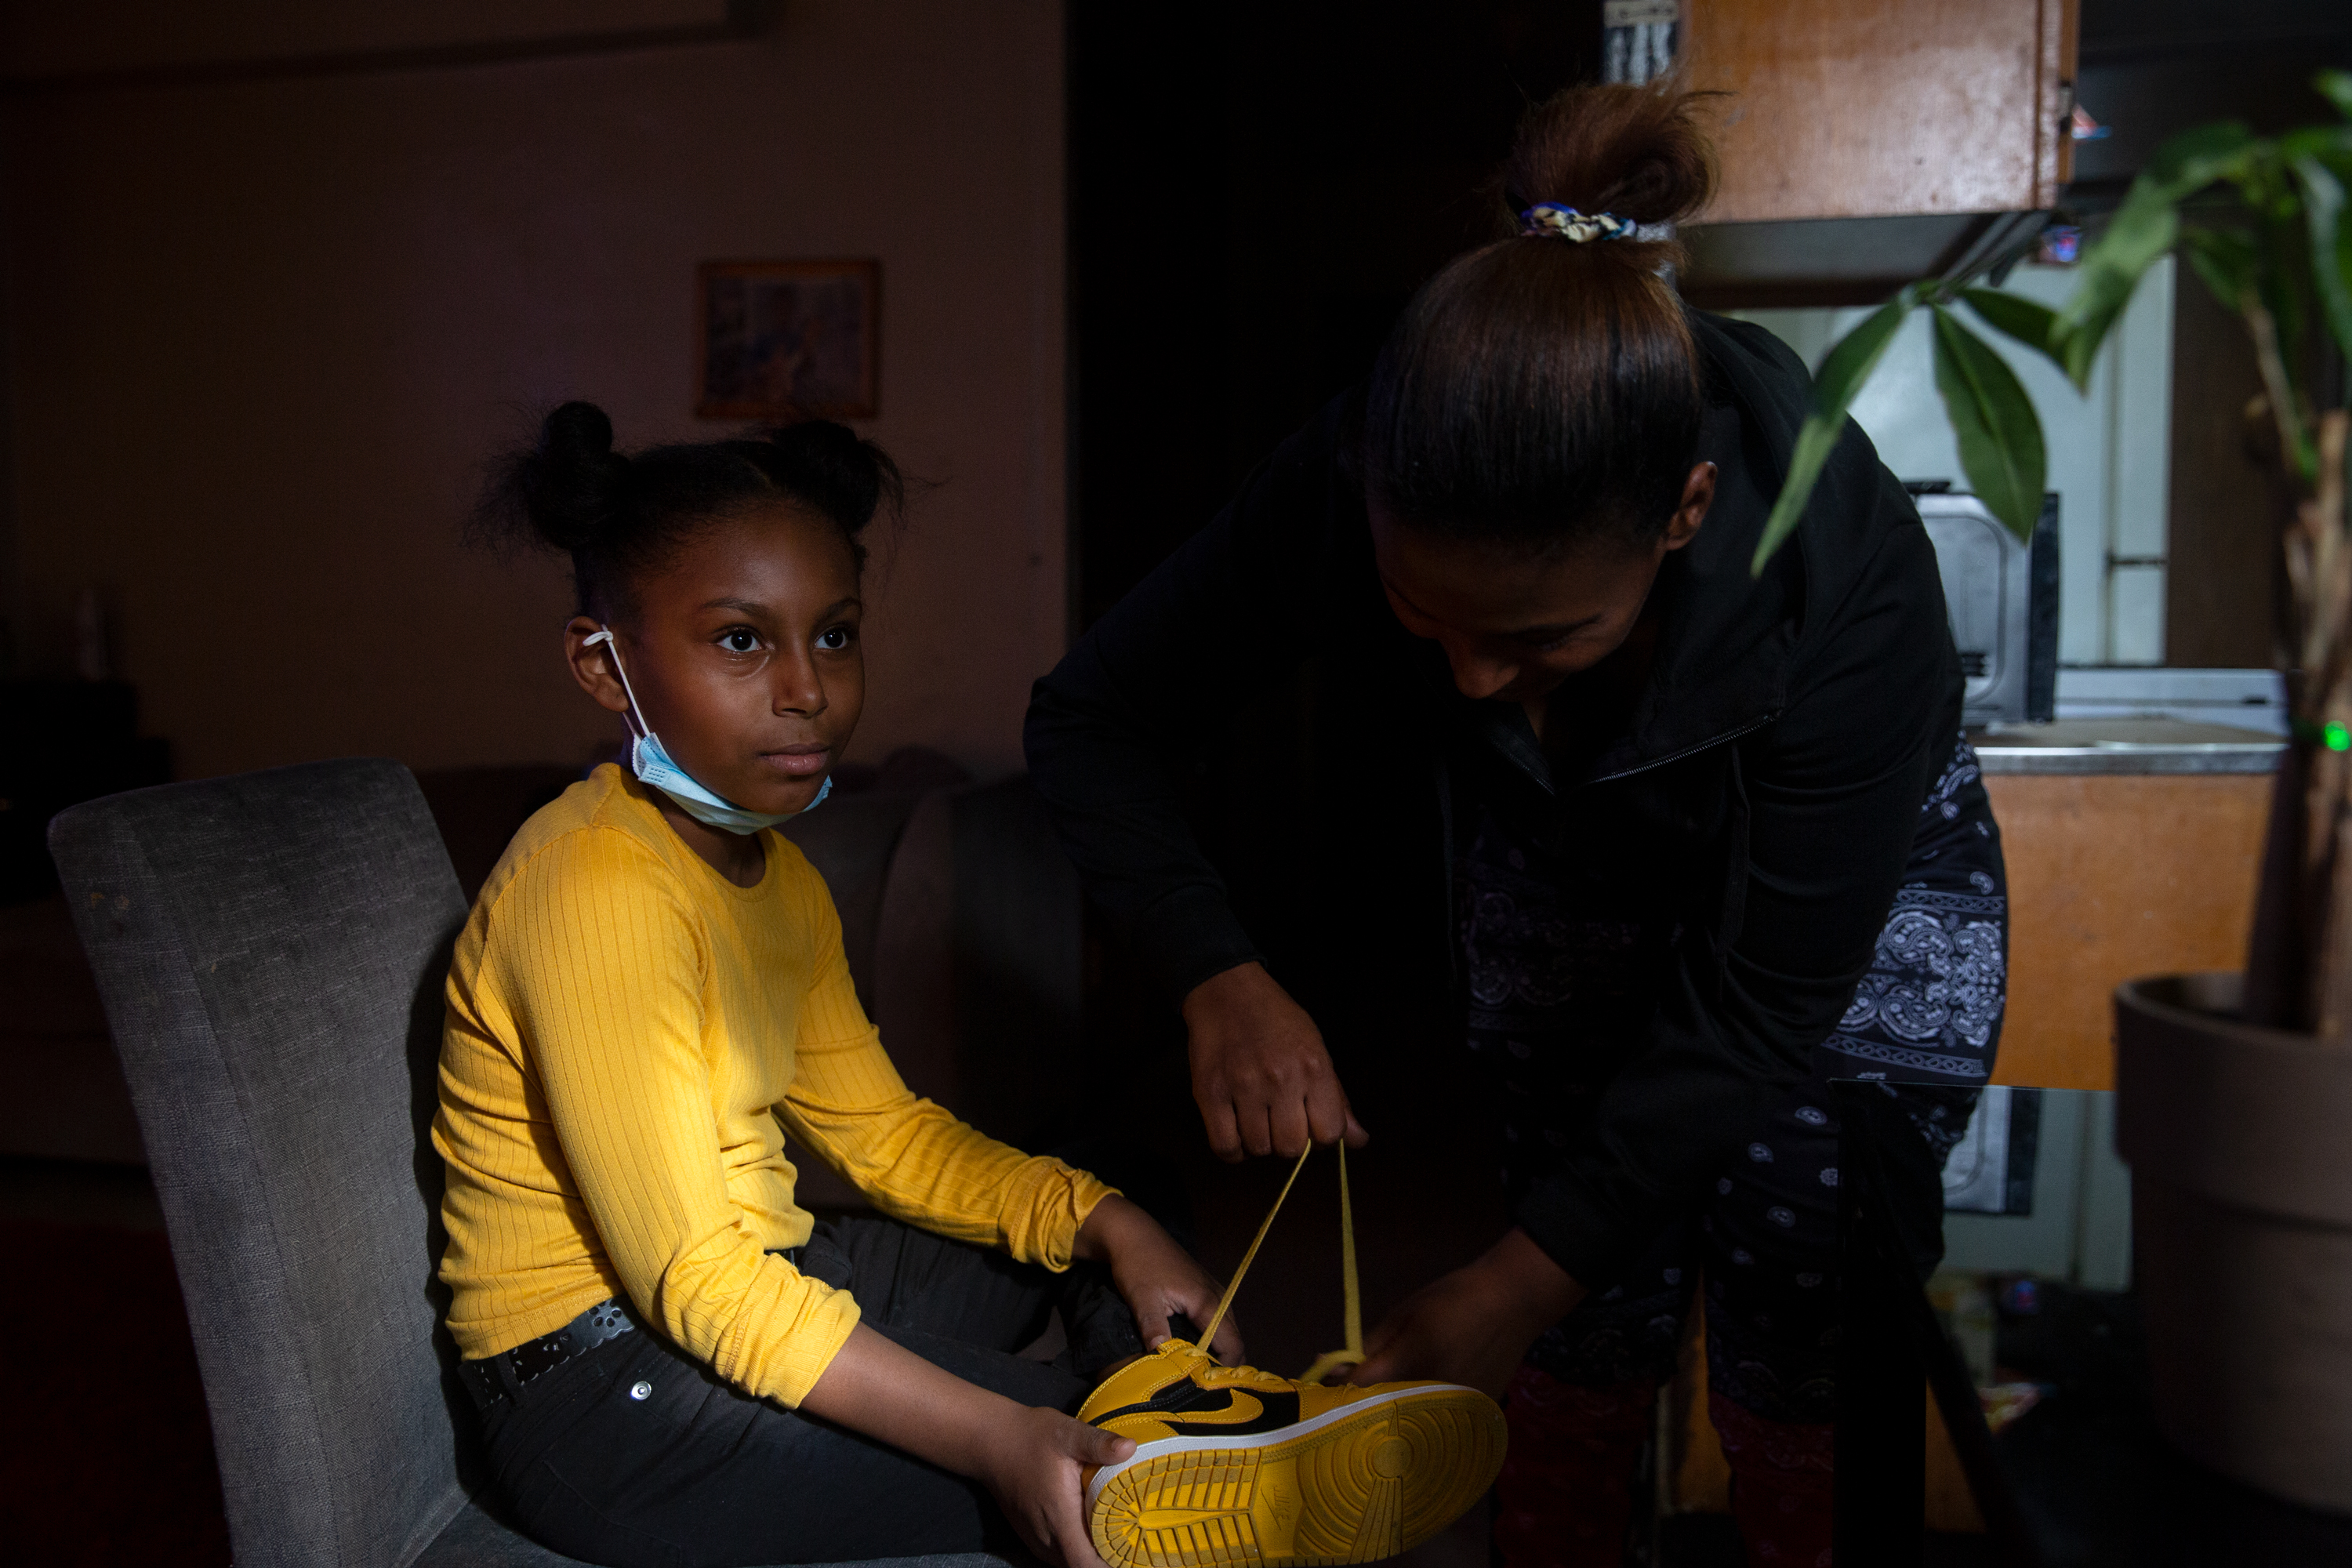 Shari Broomes helps her 8-year-old daughter, Mikhaila Bonaparte.